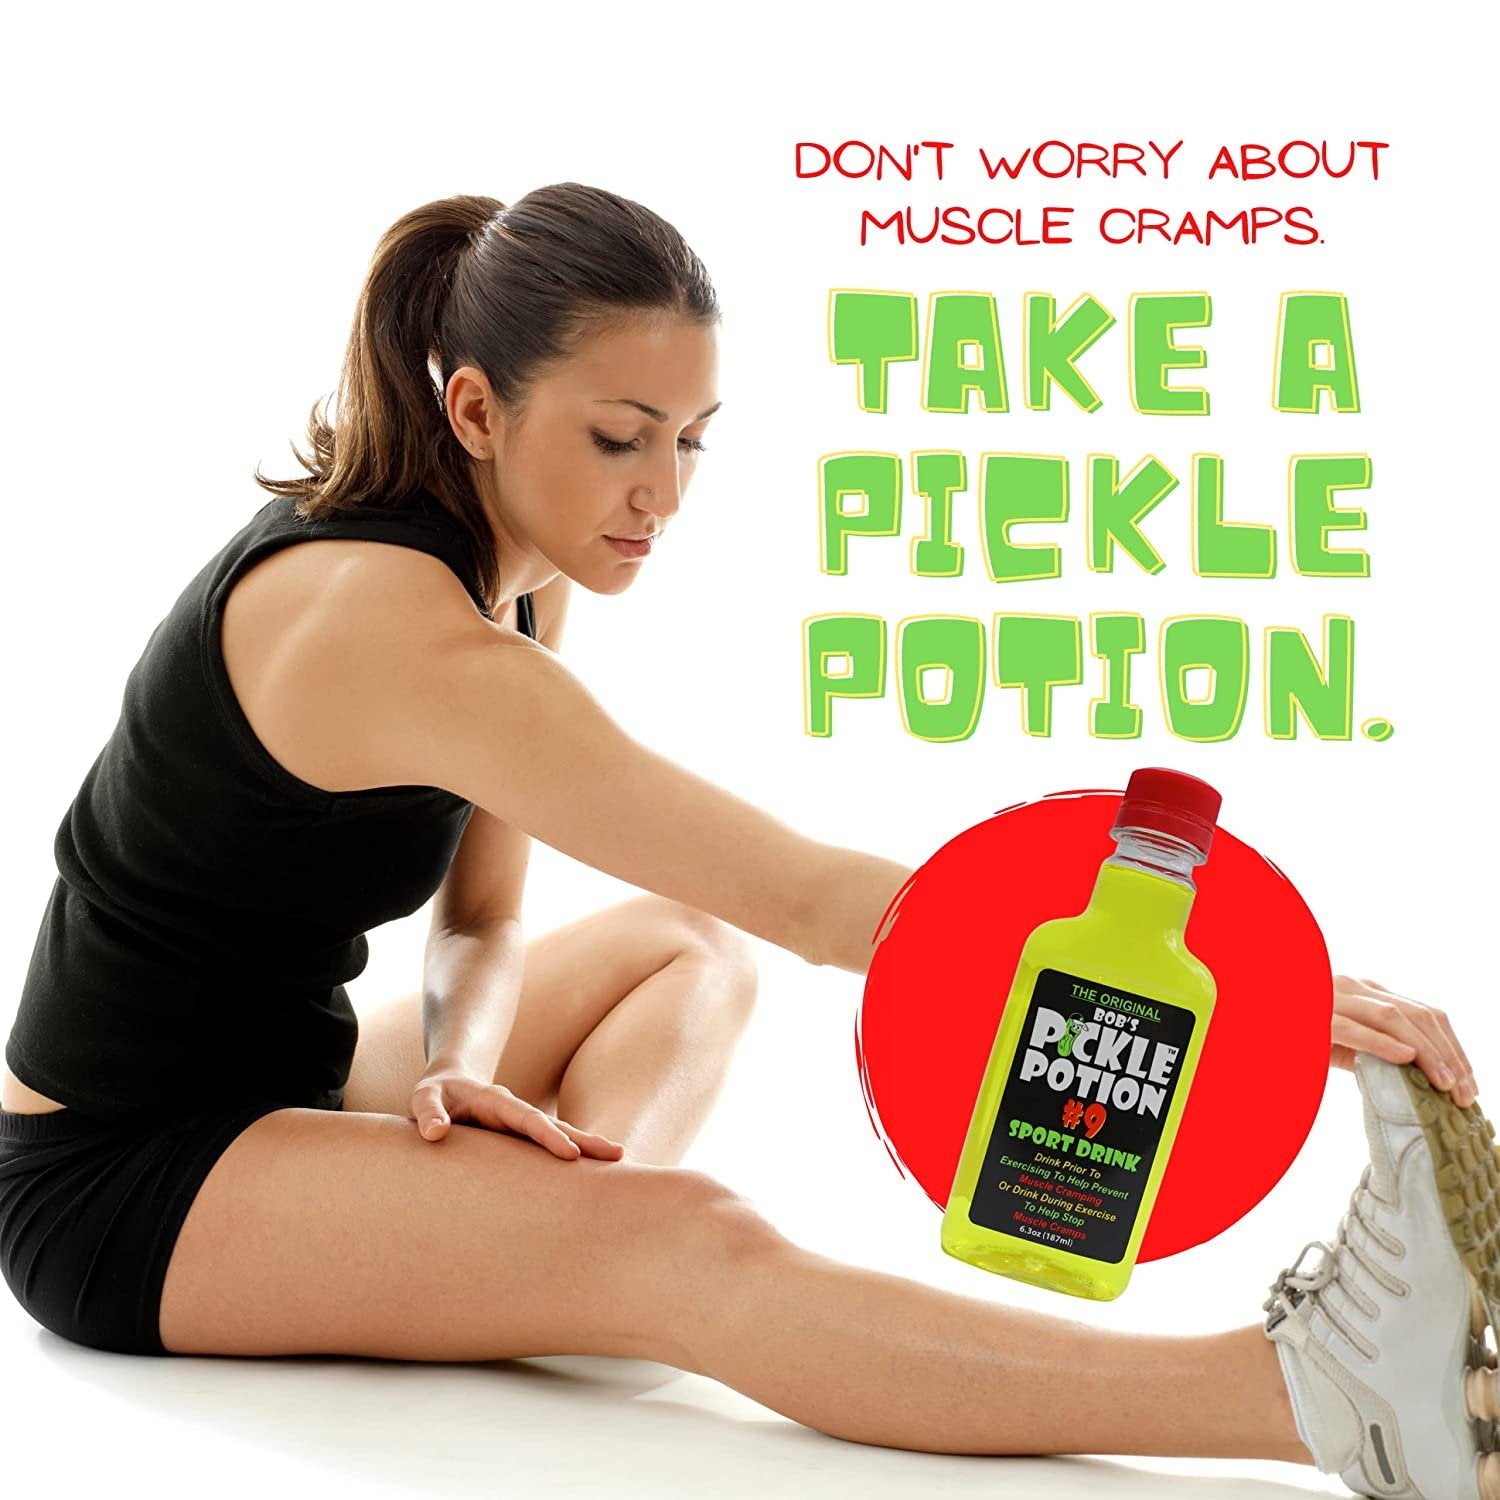 Bob's Pickle Potion 9 Sports Drinks - Electrolyte Hydration Drink - 6.3 oz - with Key Chain